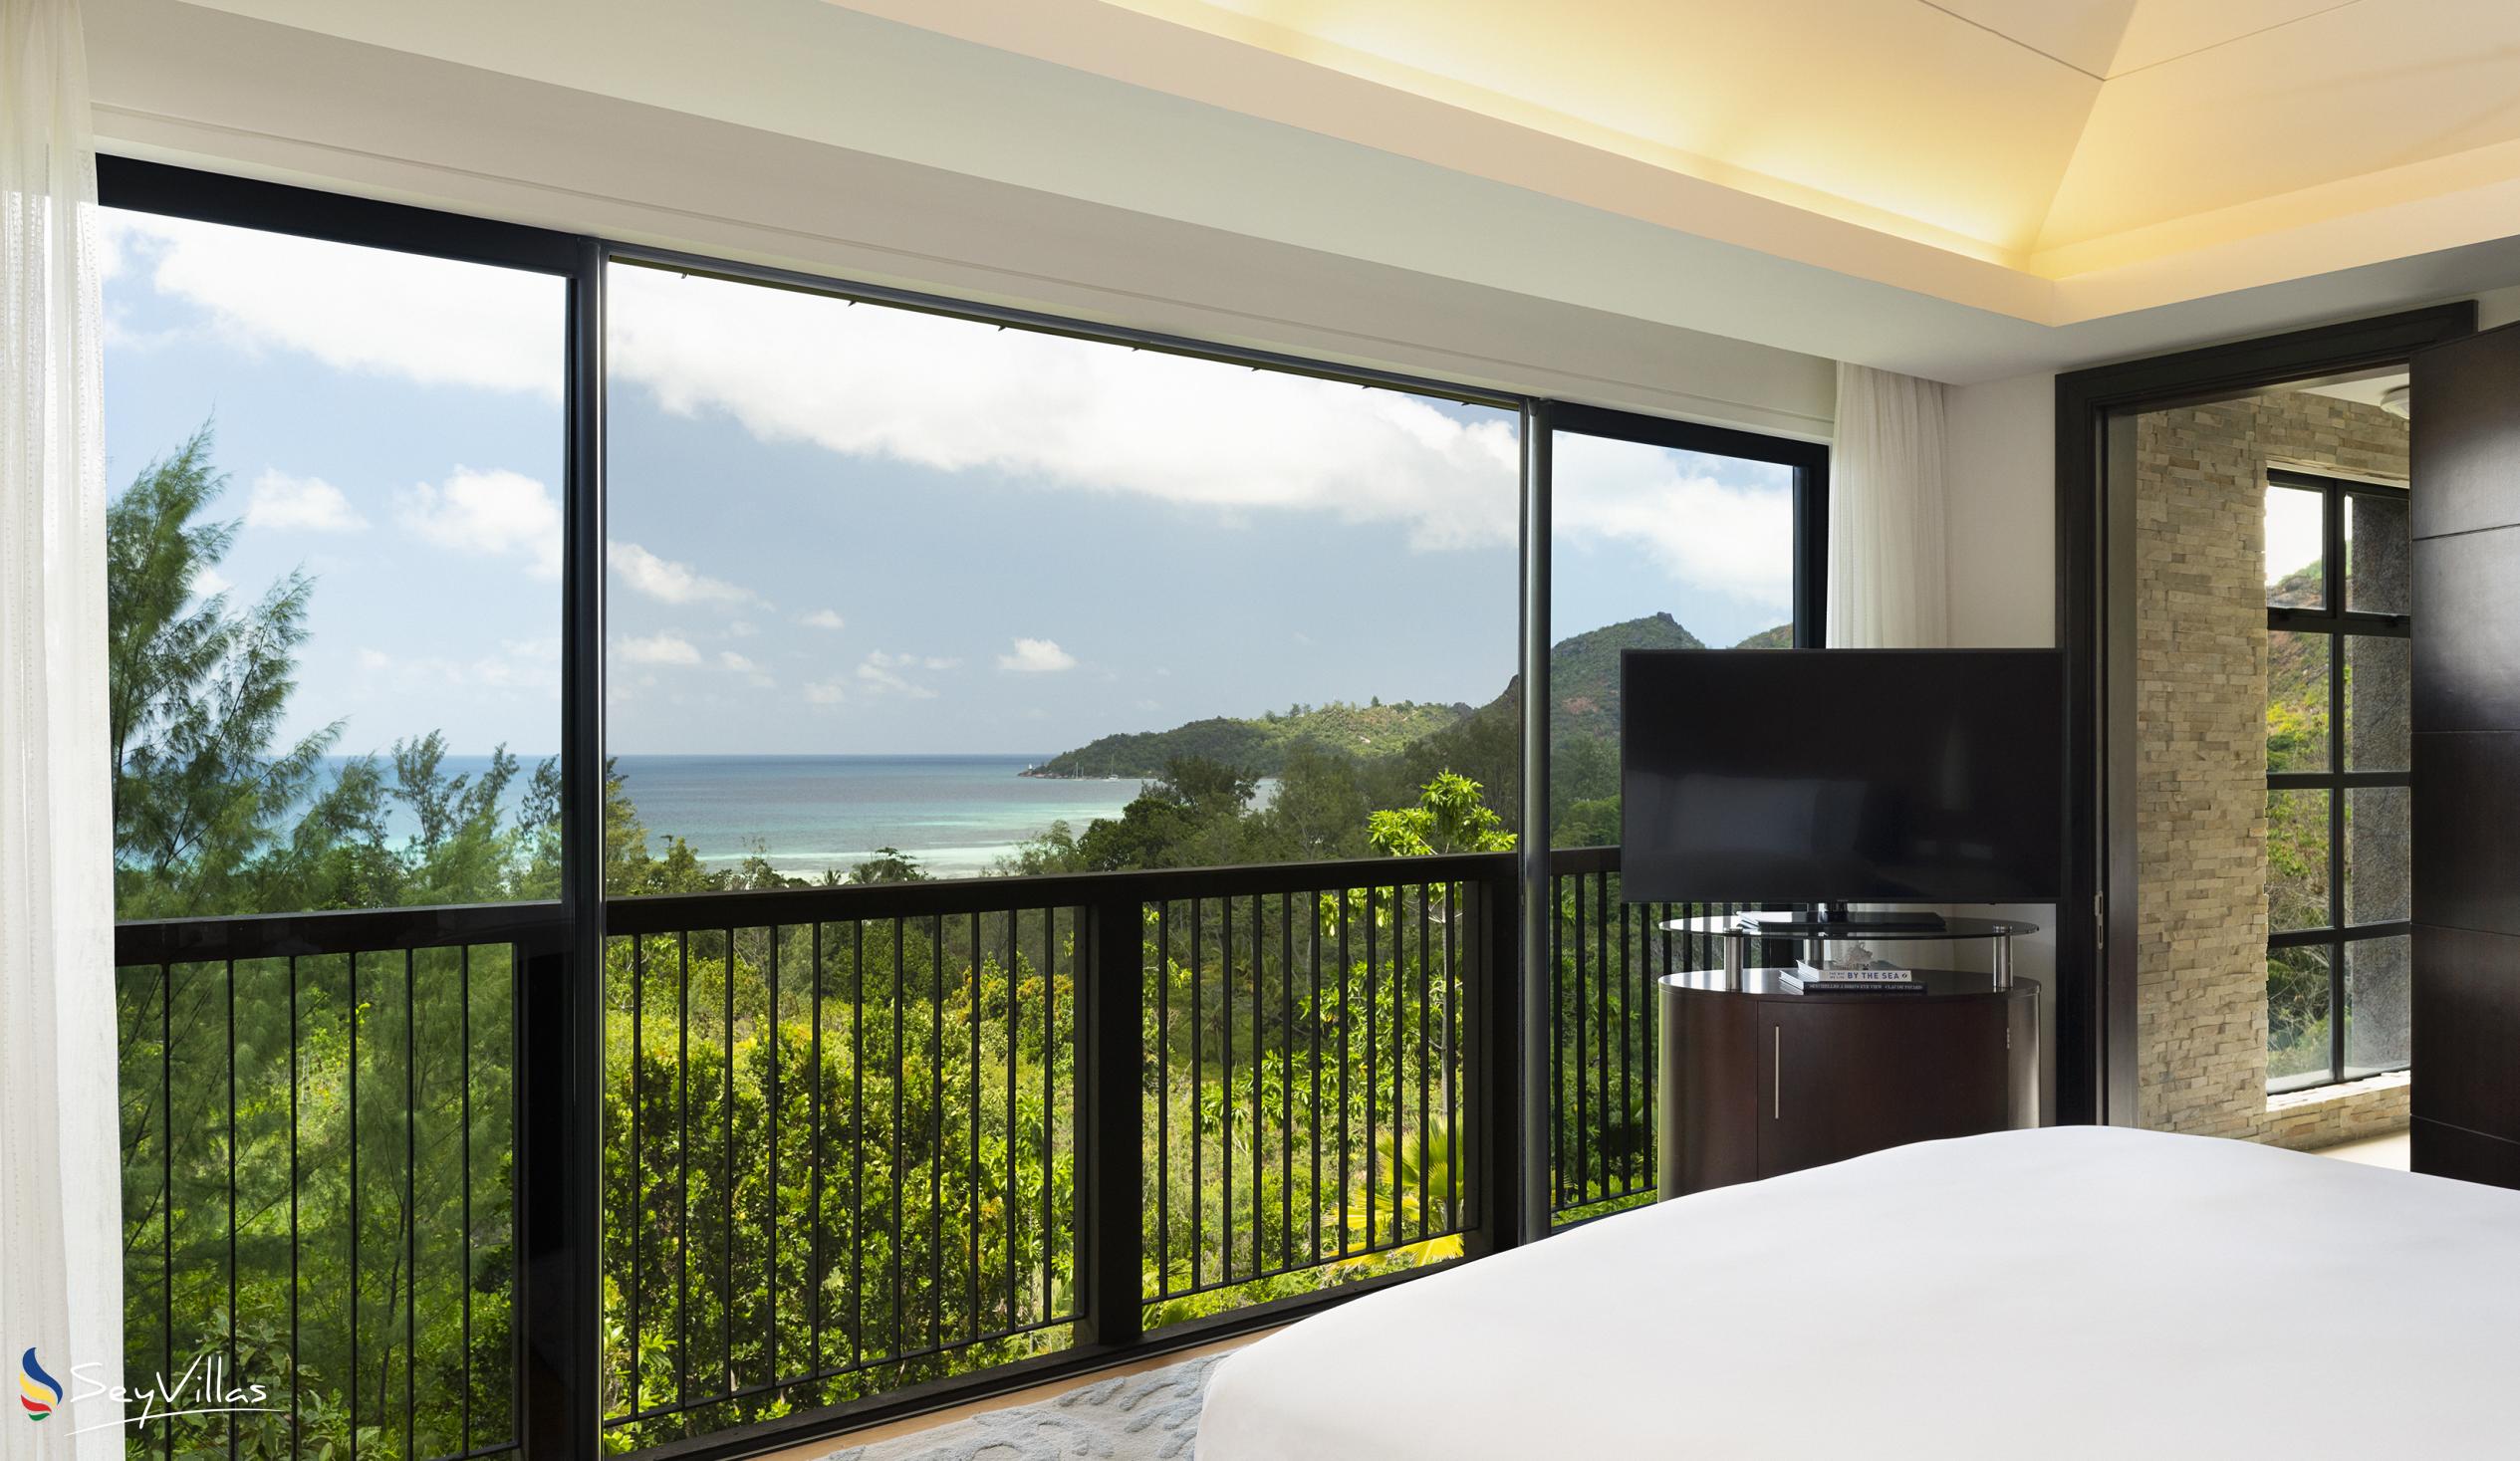 Photo 94: Raffles - 4-Bedroom Pool Residence - Praslin (Seychelles)